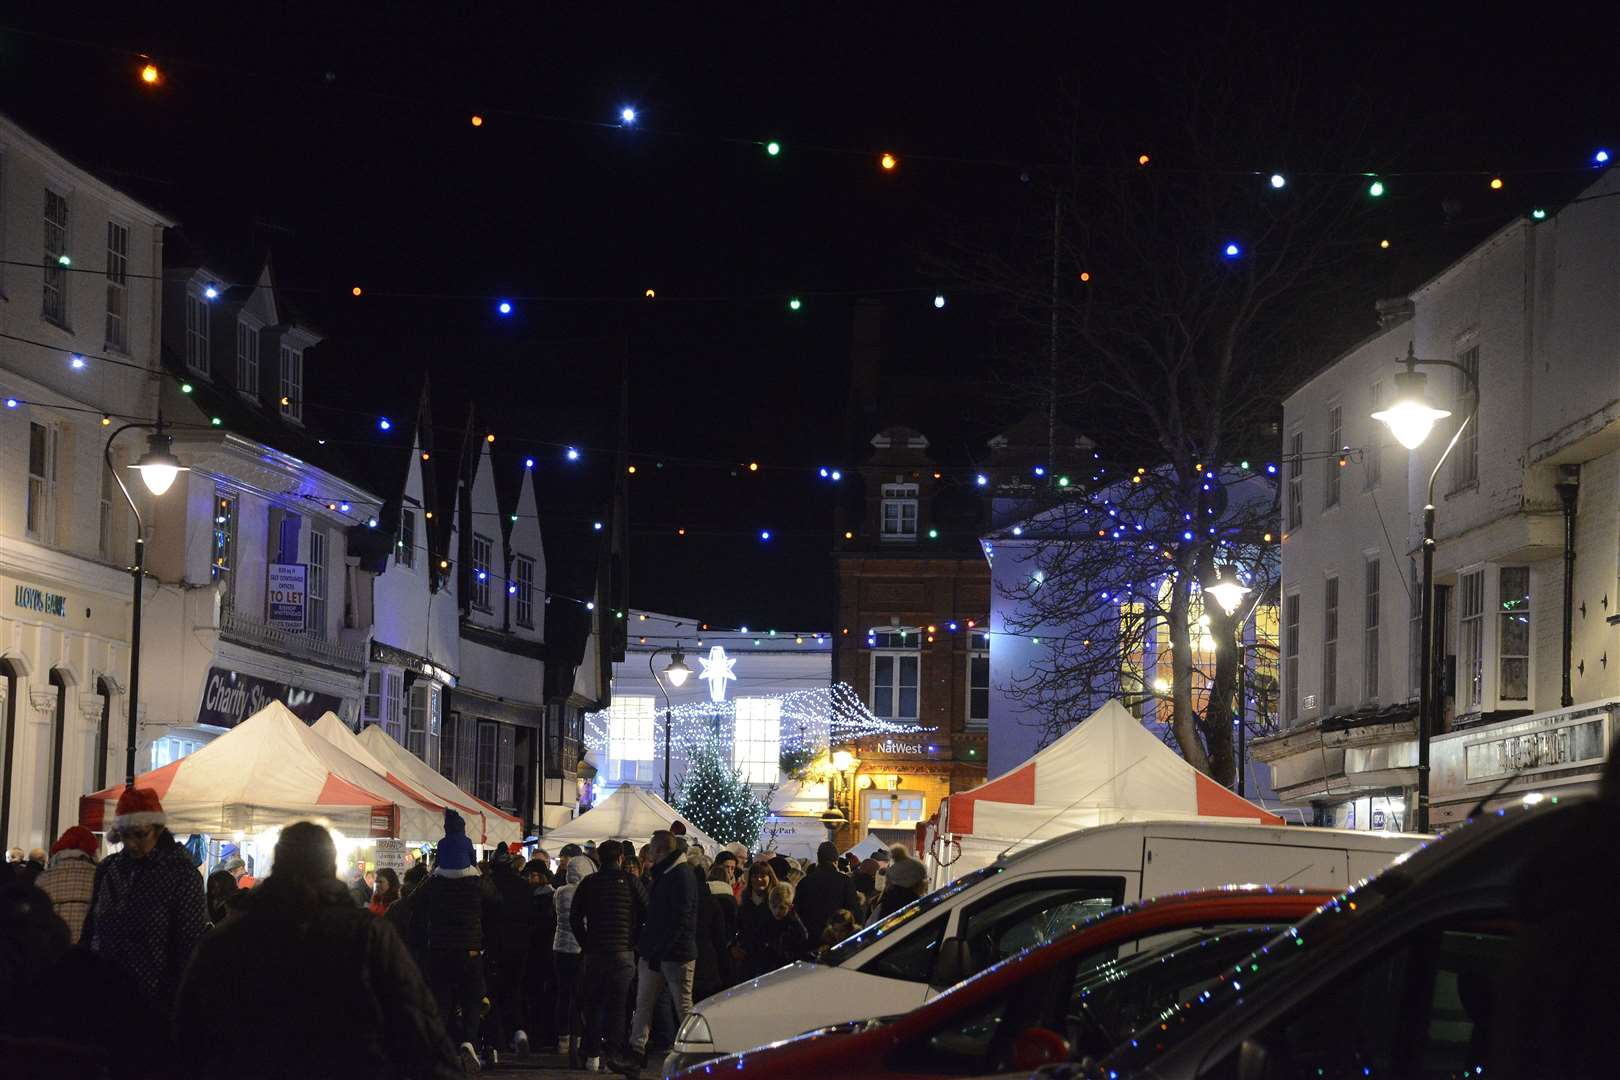 Faversham will still have its Christmas lights - but no community gathering